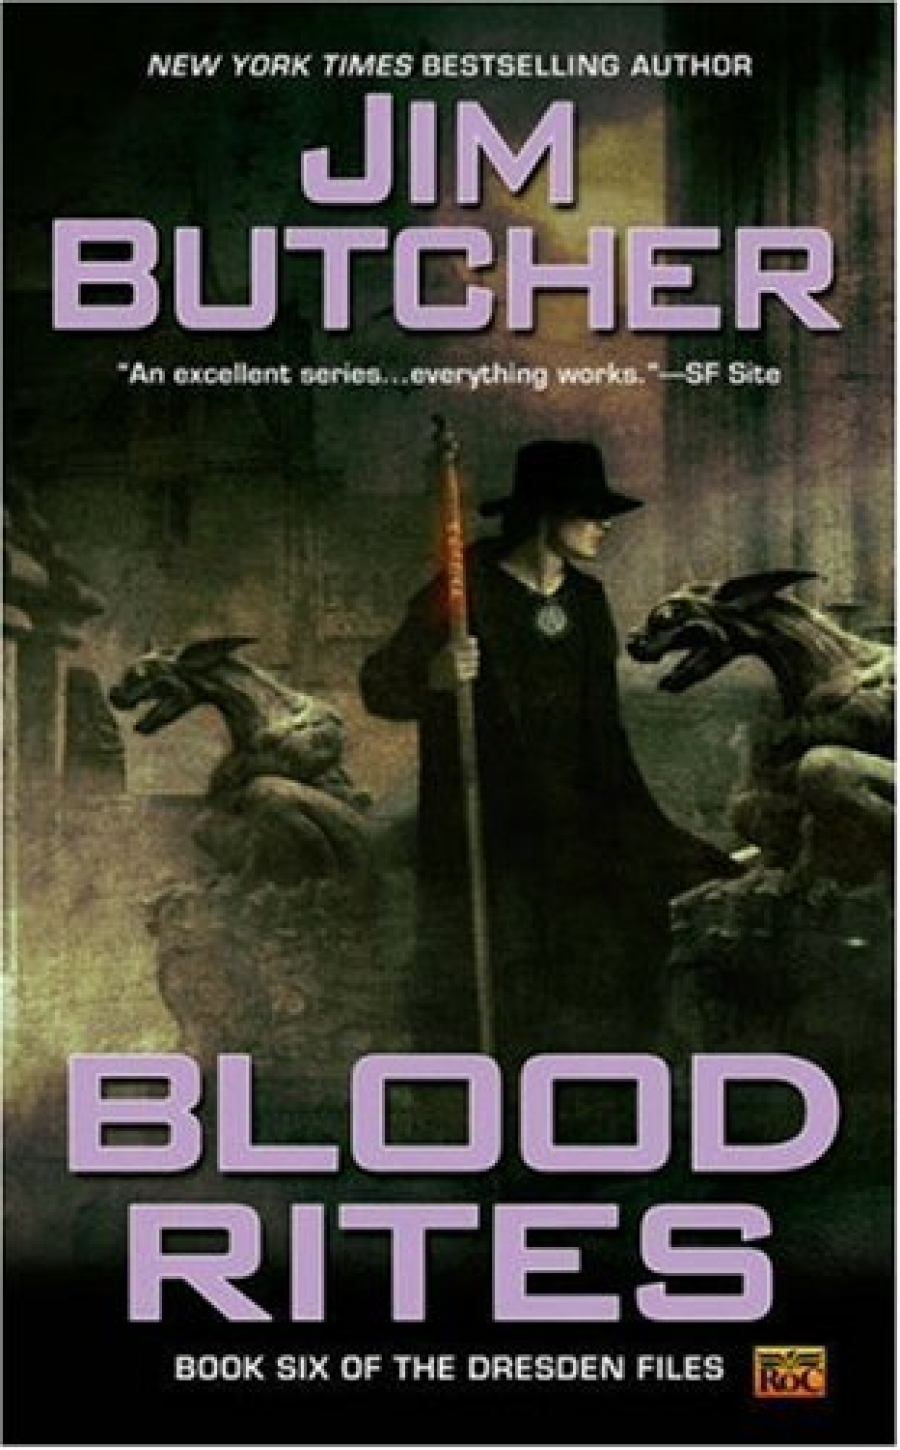 Butcher, Jim Dresden Files 6: Blood Rites 